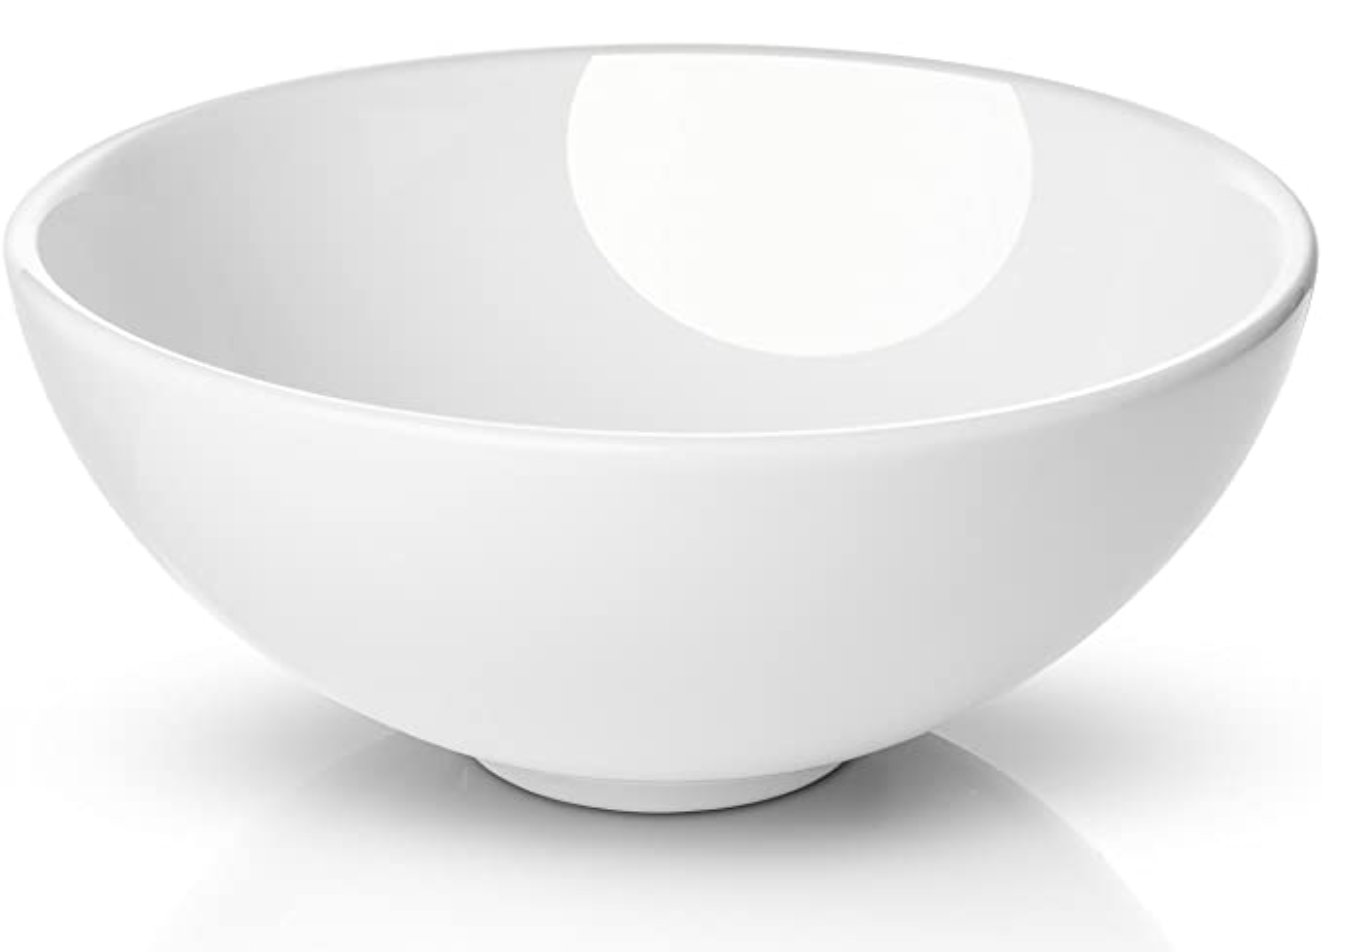 Miligore 11" Round White Ceramic Vessel Sink - Modern Above Counter Bathroom Vanity Bowl